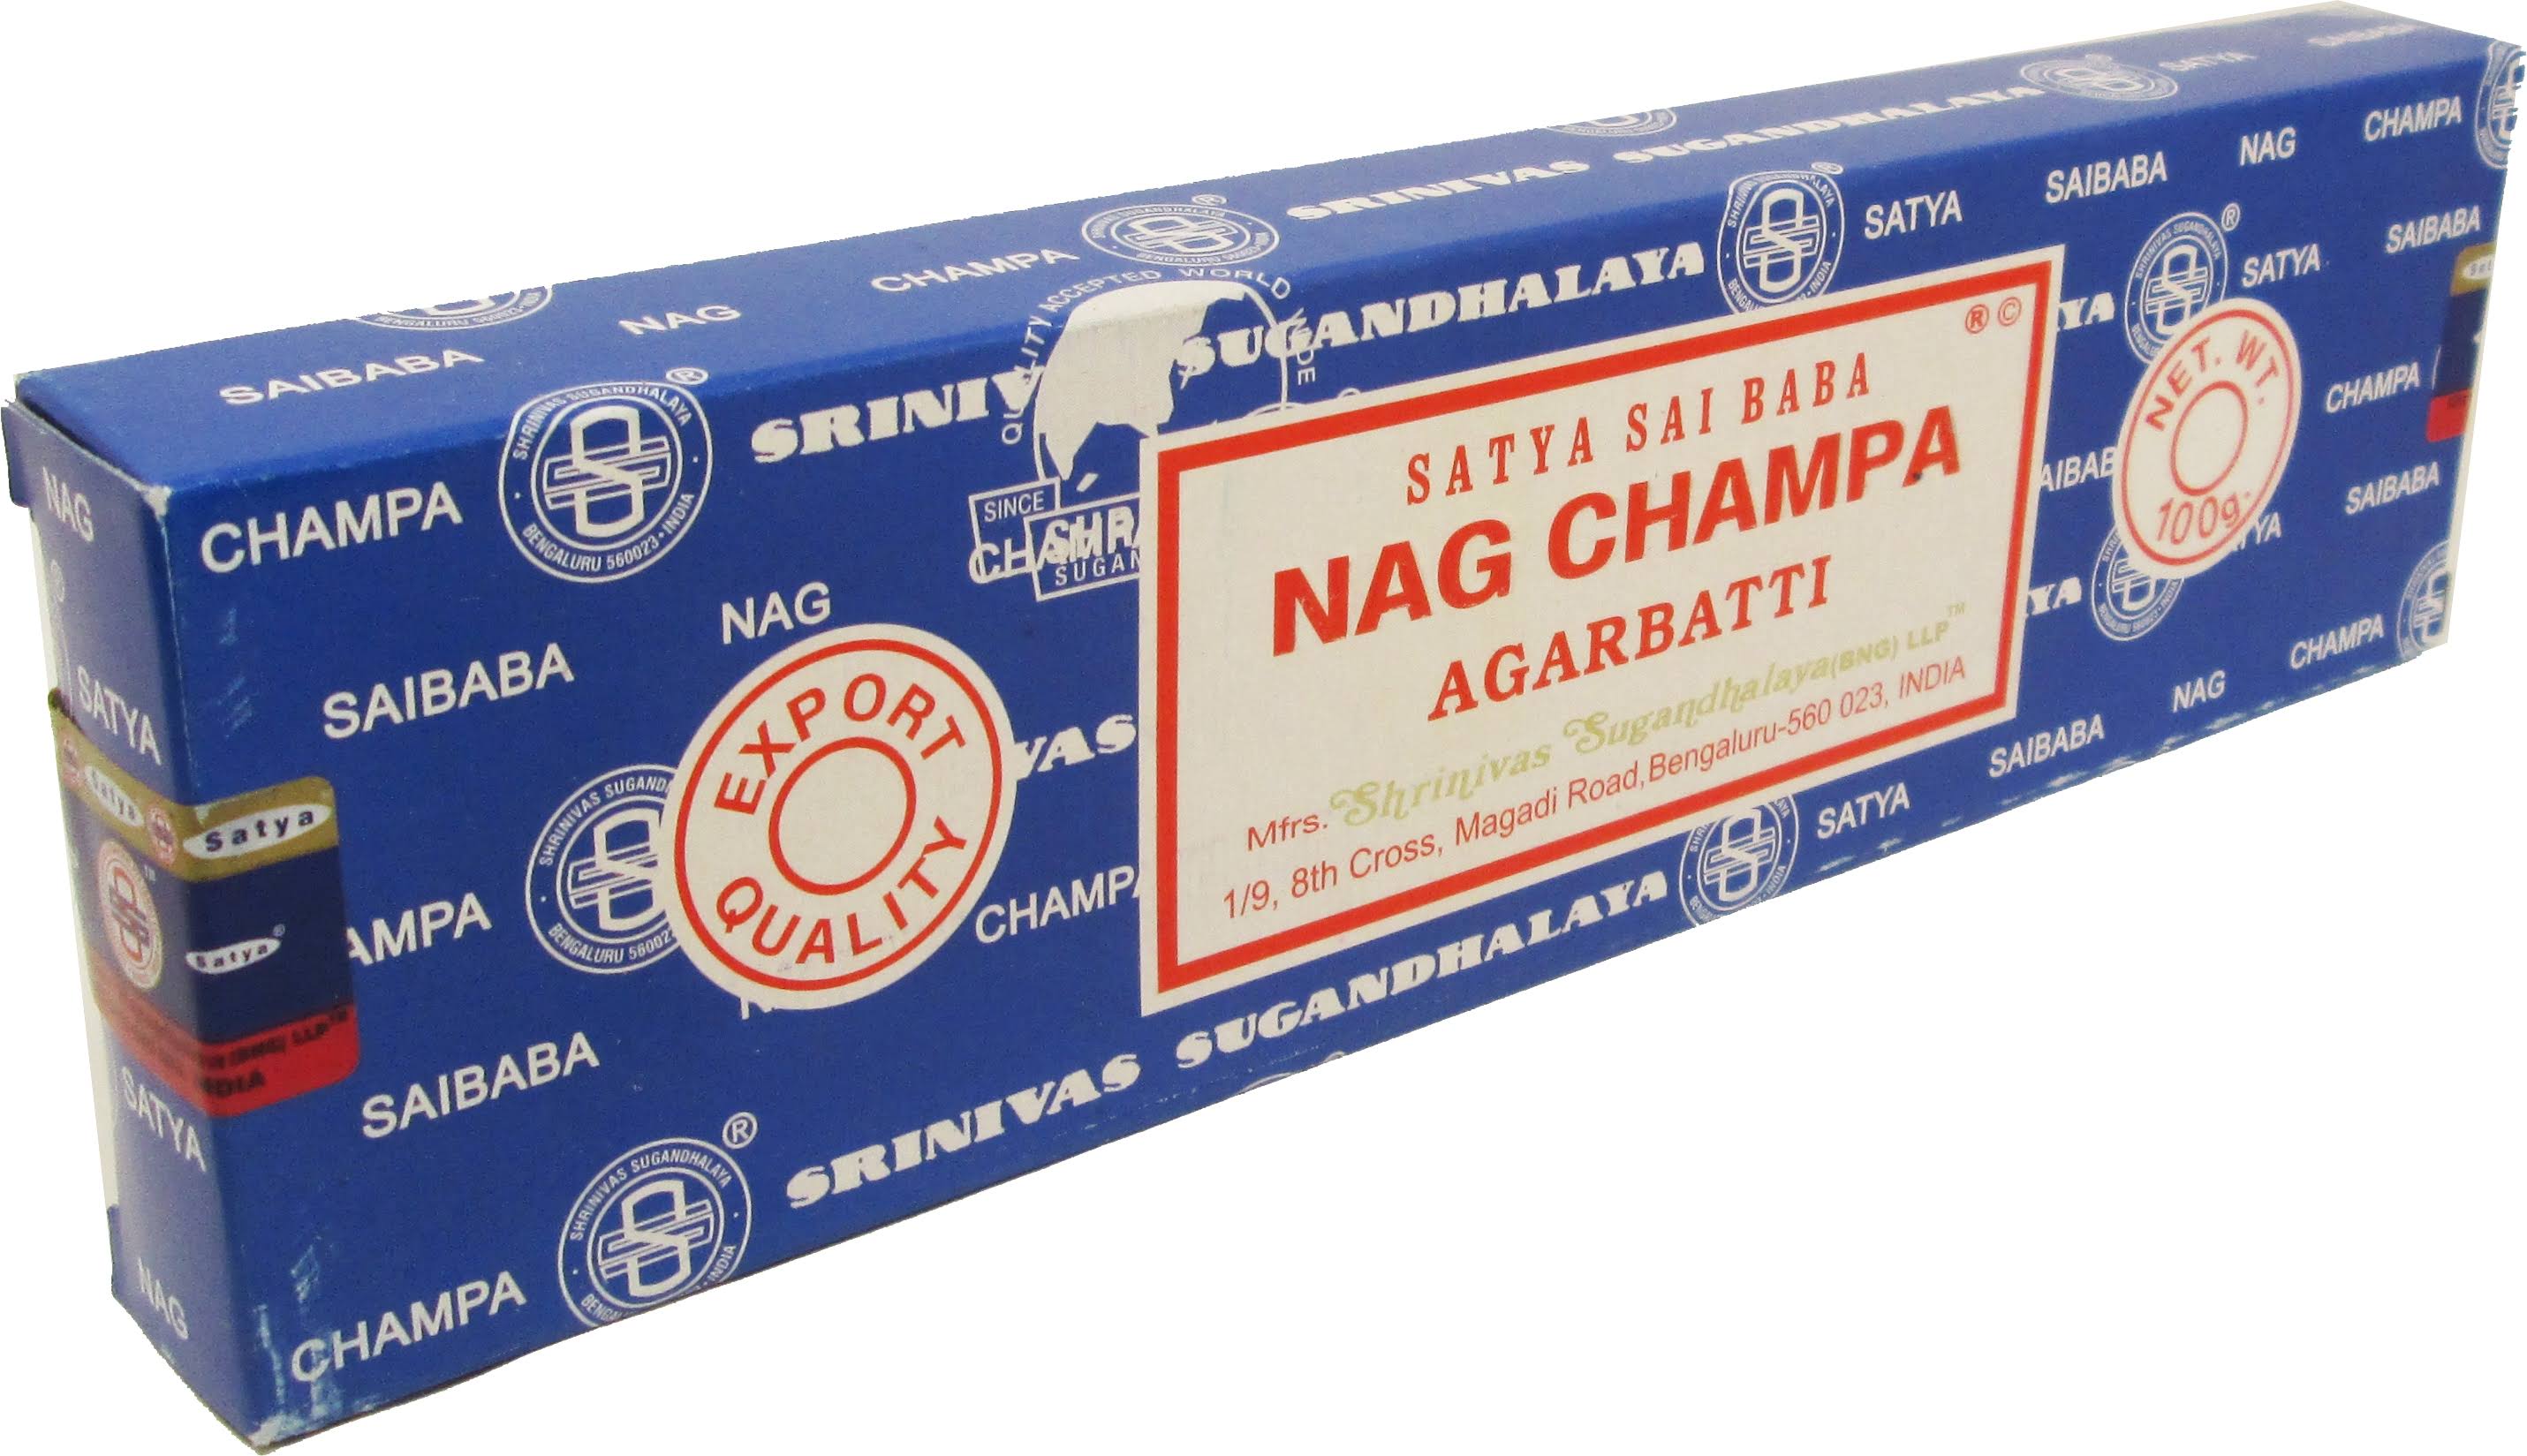 01426 Satya Nag Champa Incense Sticks 100g, Room Fragrance